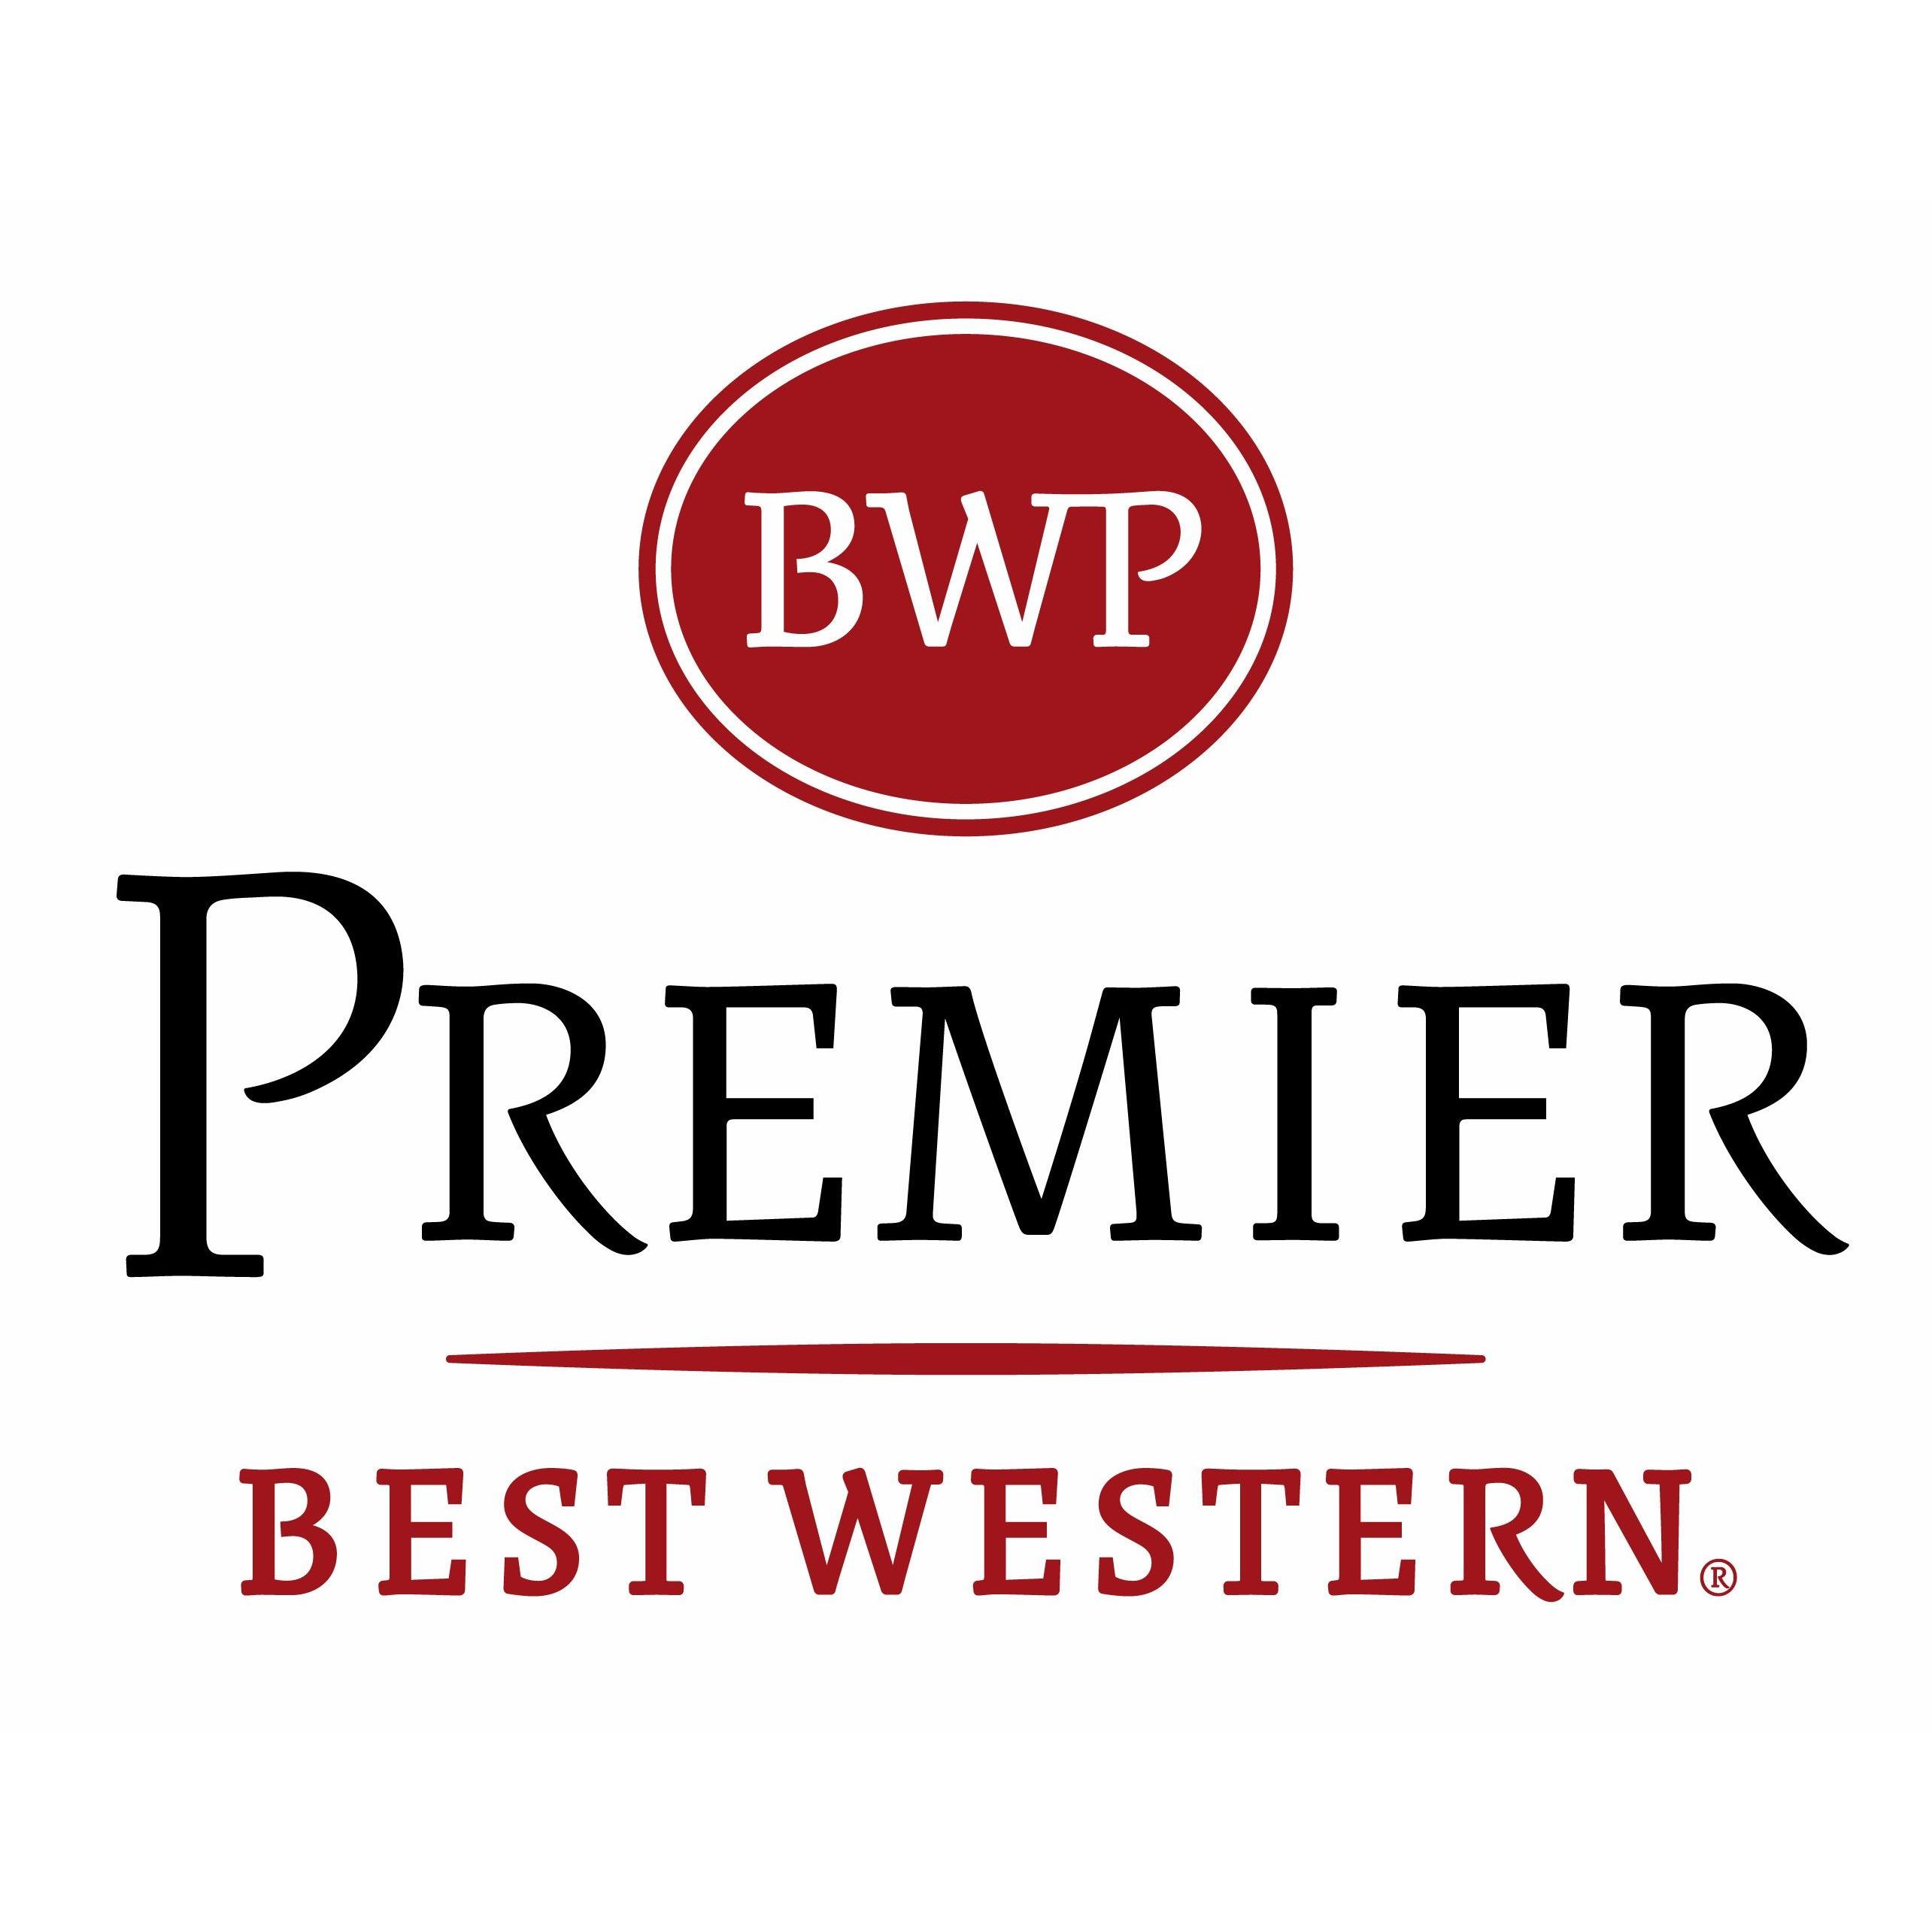 Best Western Premier Ib Hotel Friedberger Warte